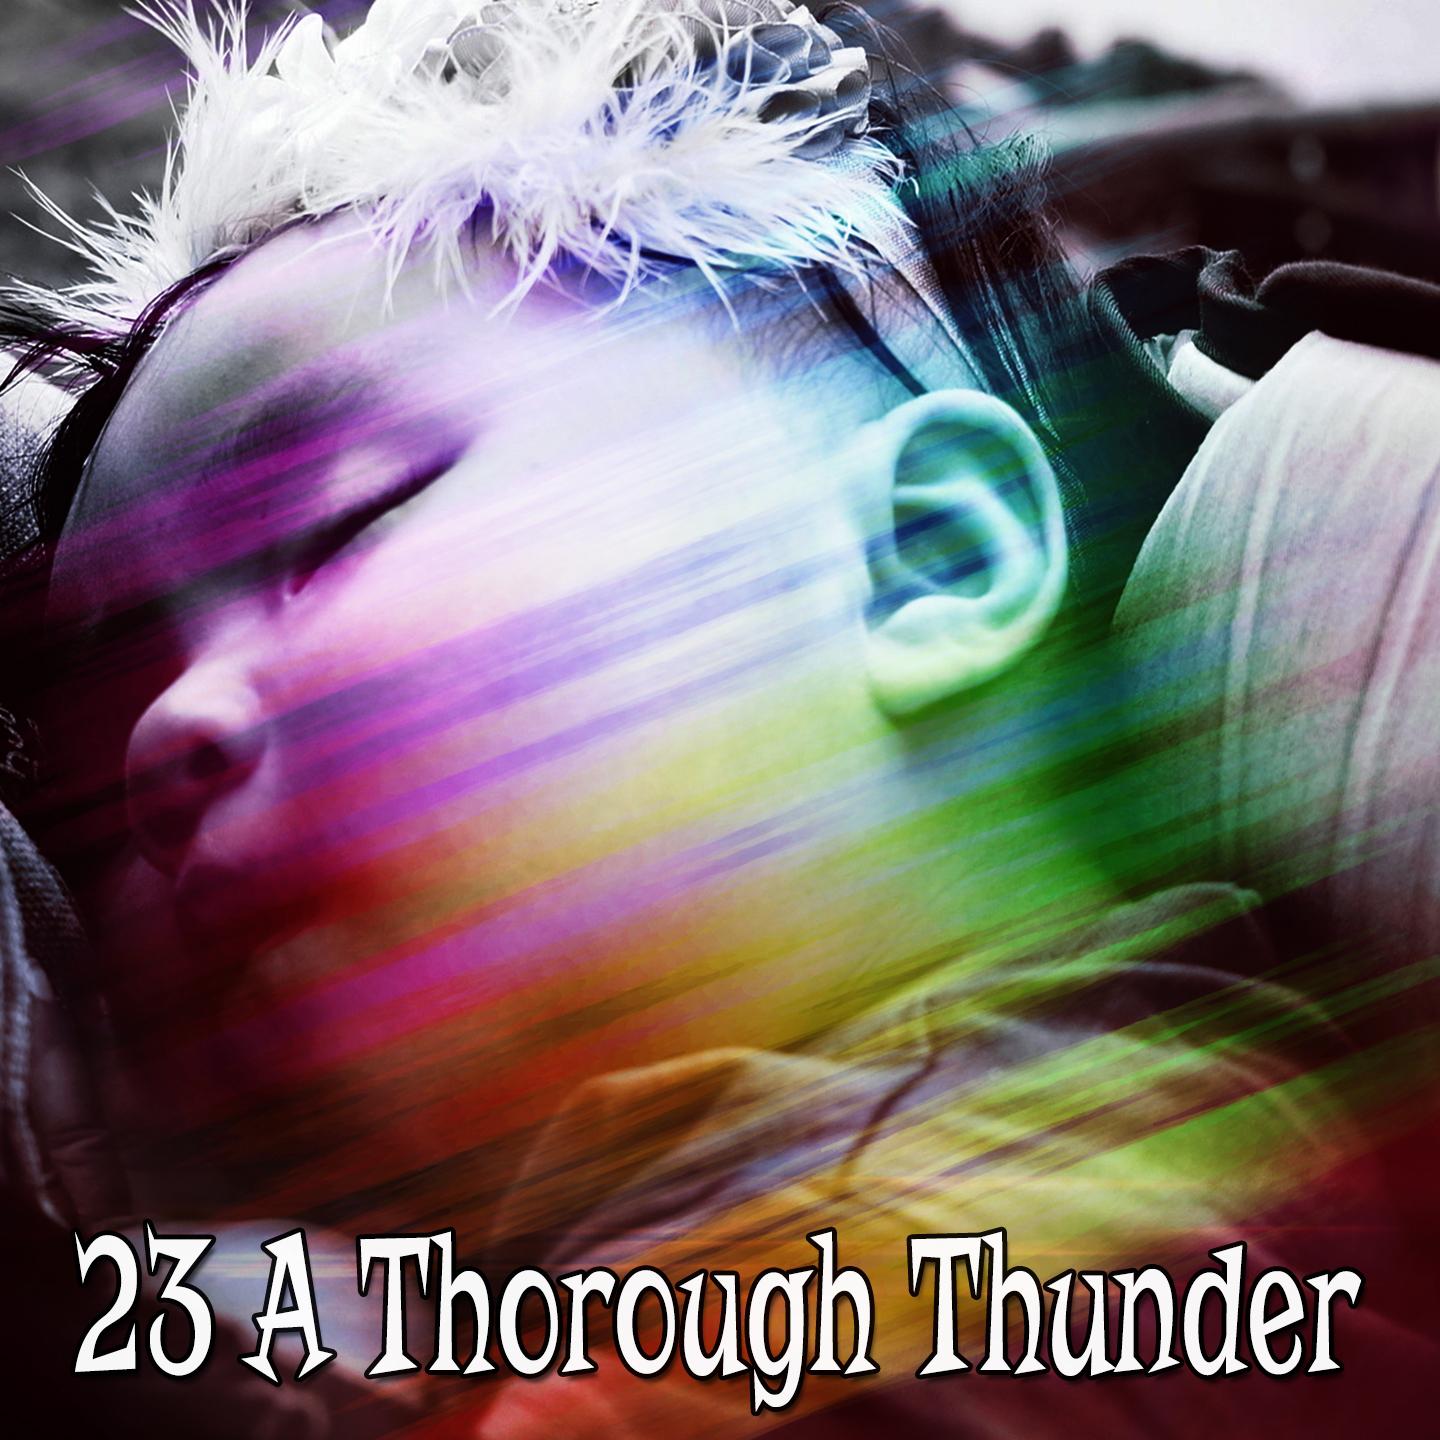 23 A Thorough Thunder